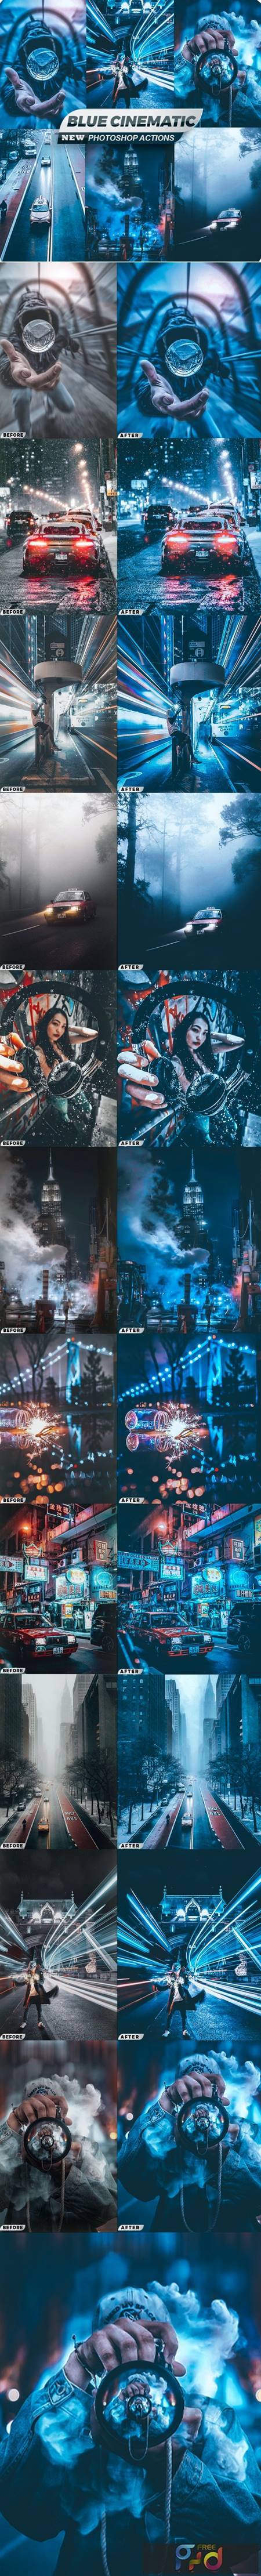 Blue Cinematic City Photoshop Actions